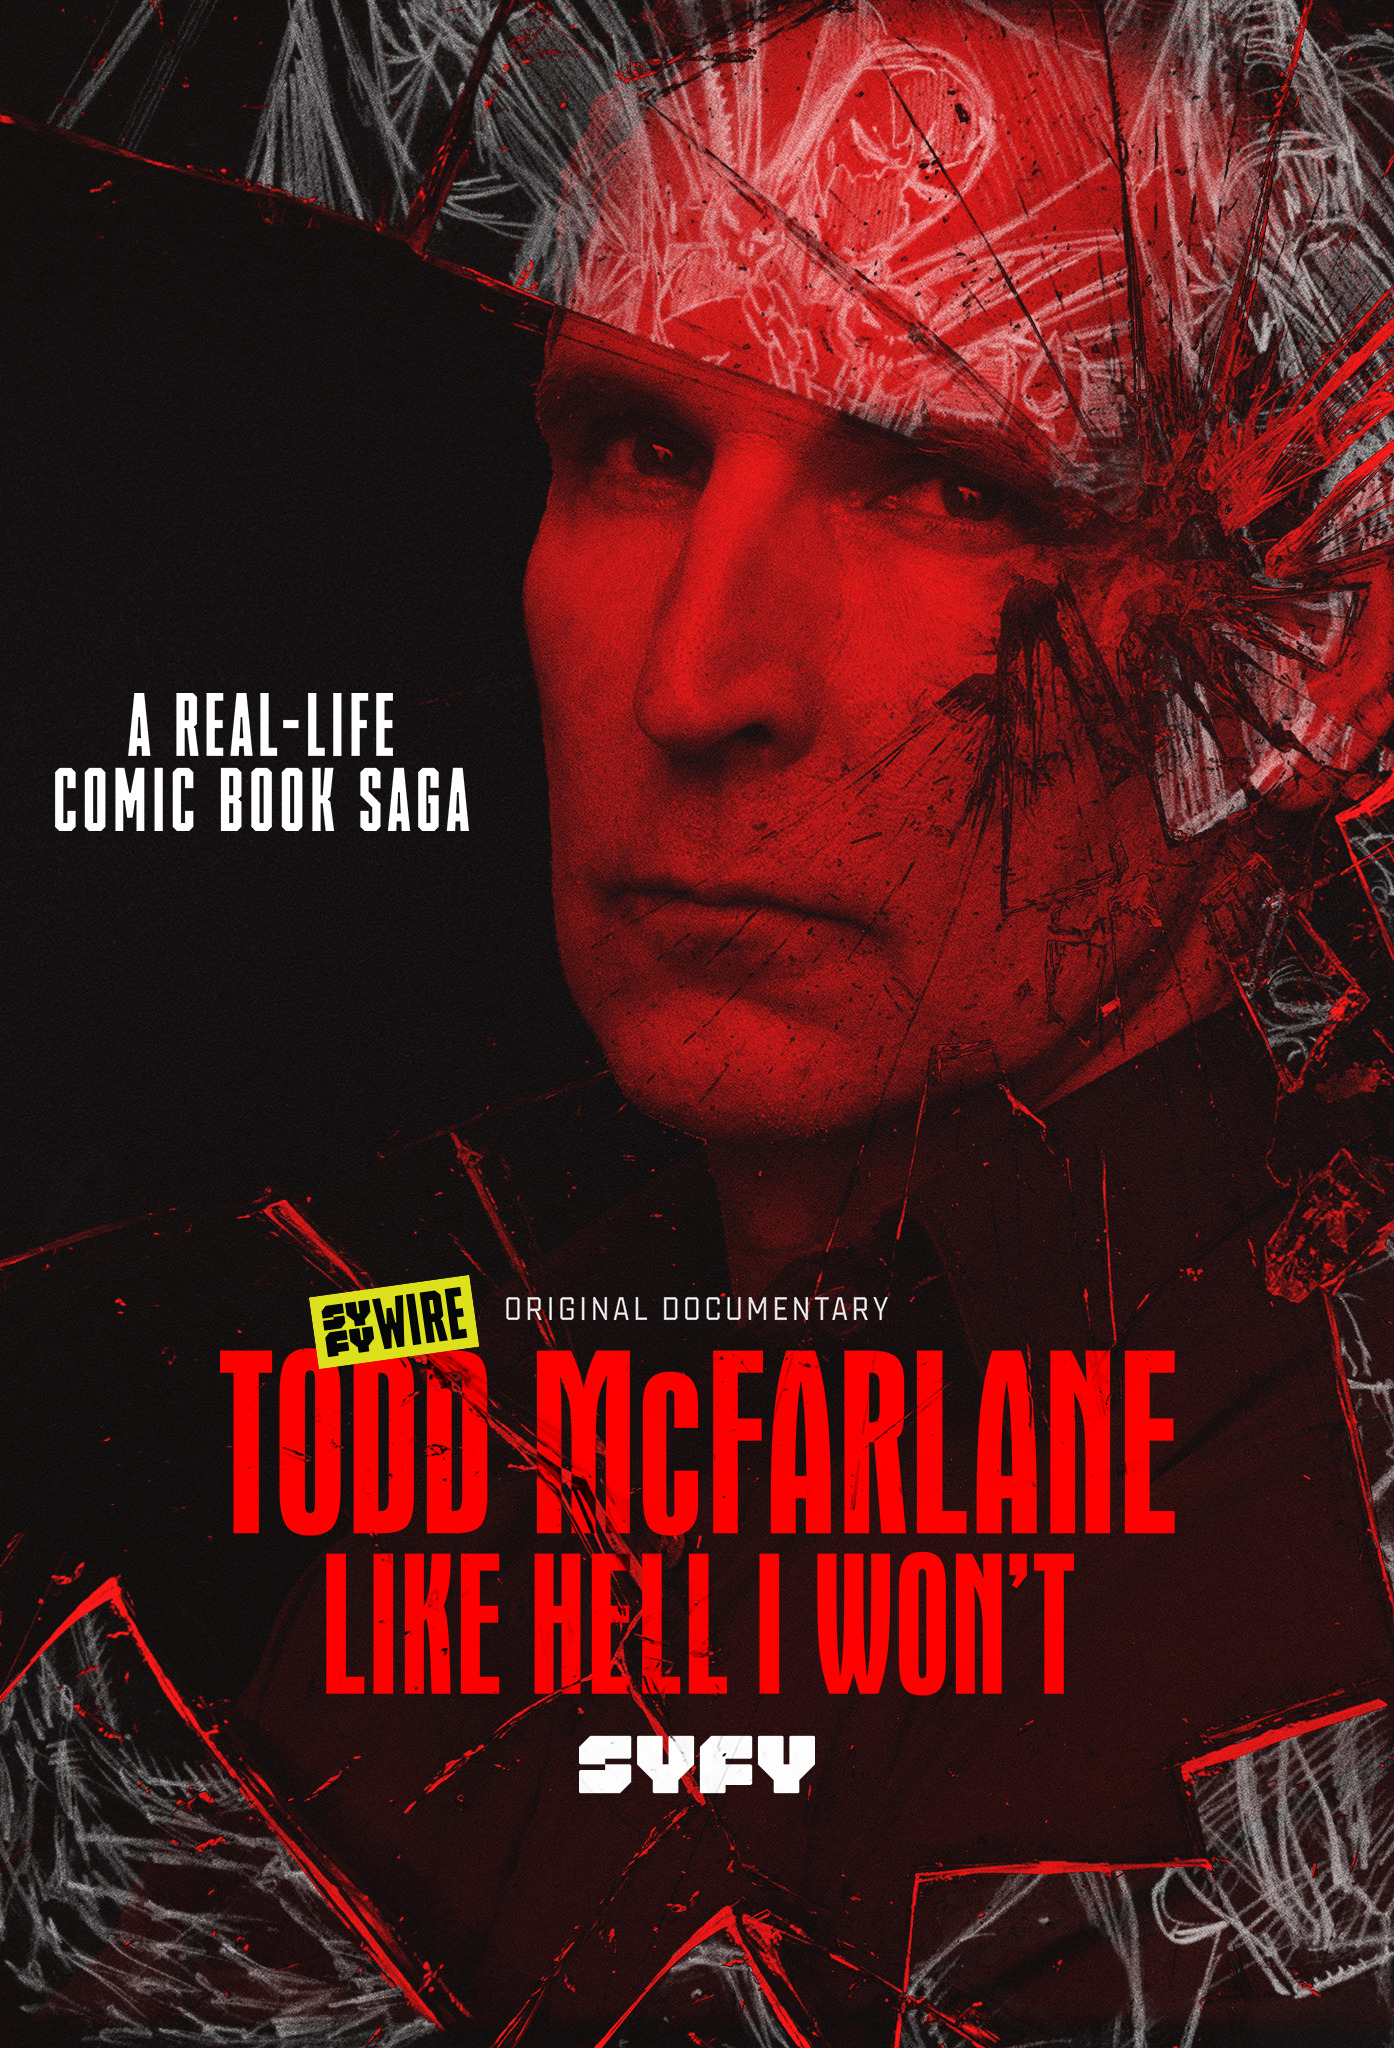 Mega Sized TV Poster Image for Todd McFarlane: Like Hell I Won't 